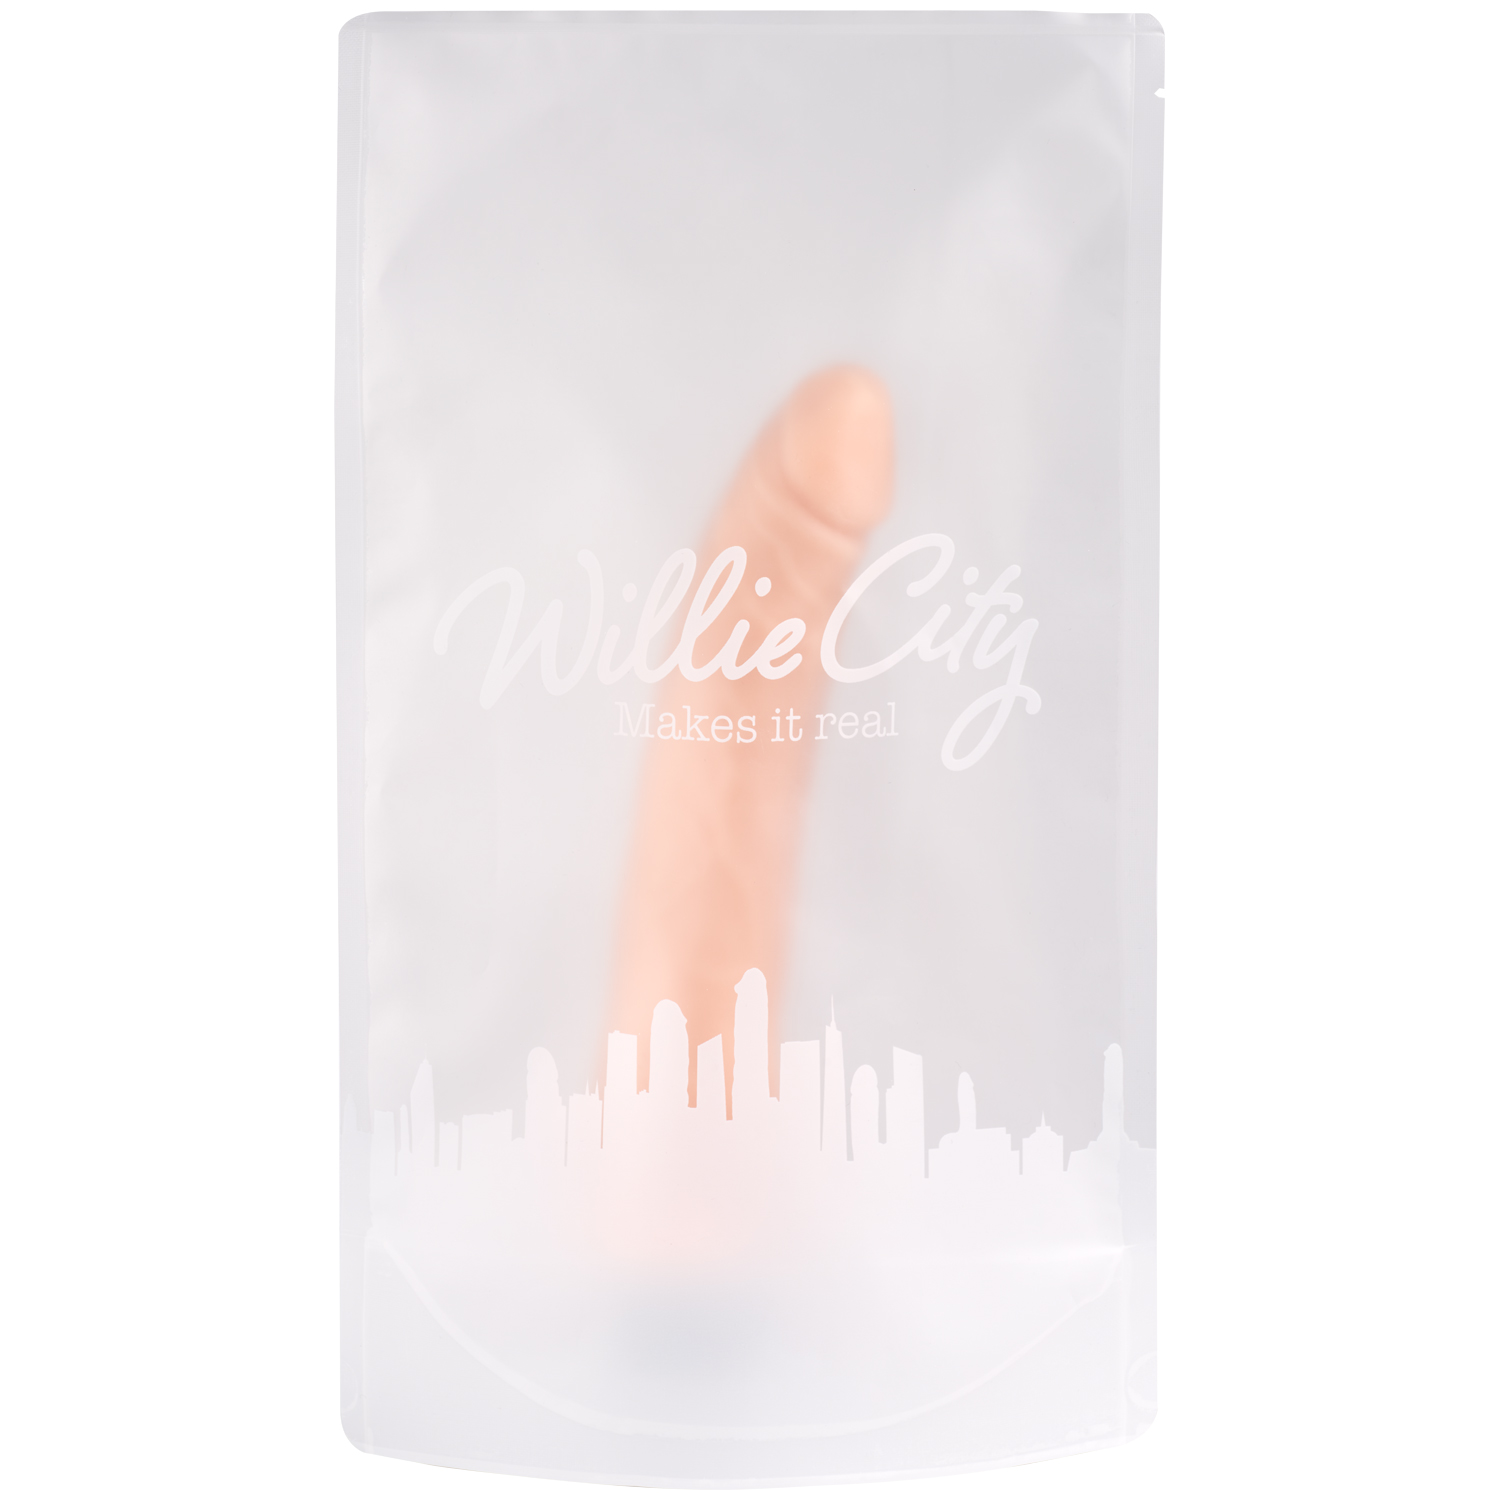 Willie City Realistic Multispeed Dildo Vibrator 24 cm thumbnail